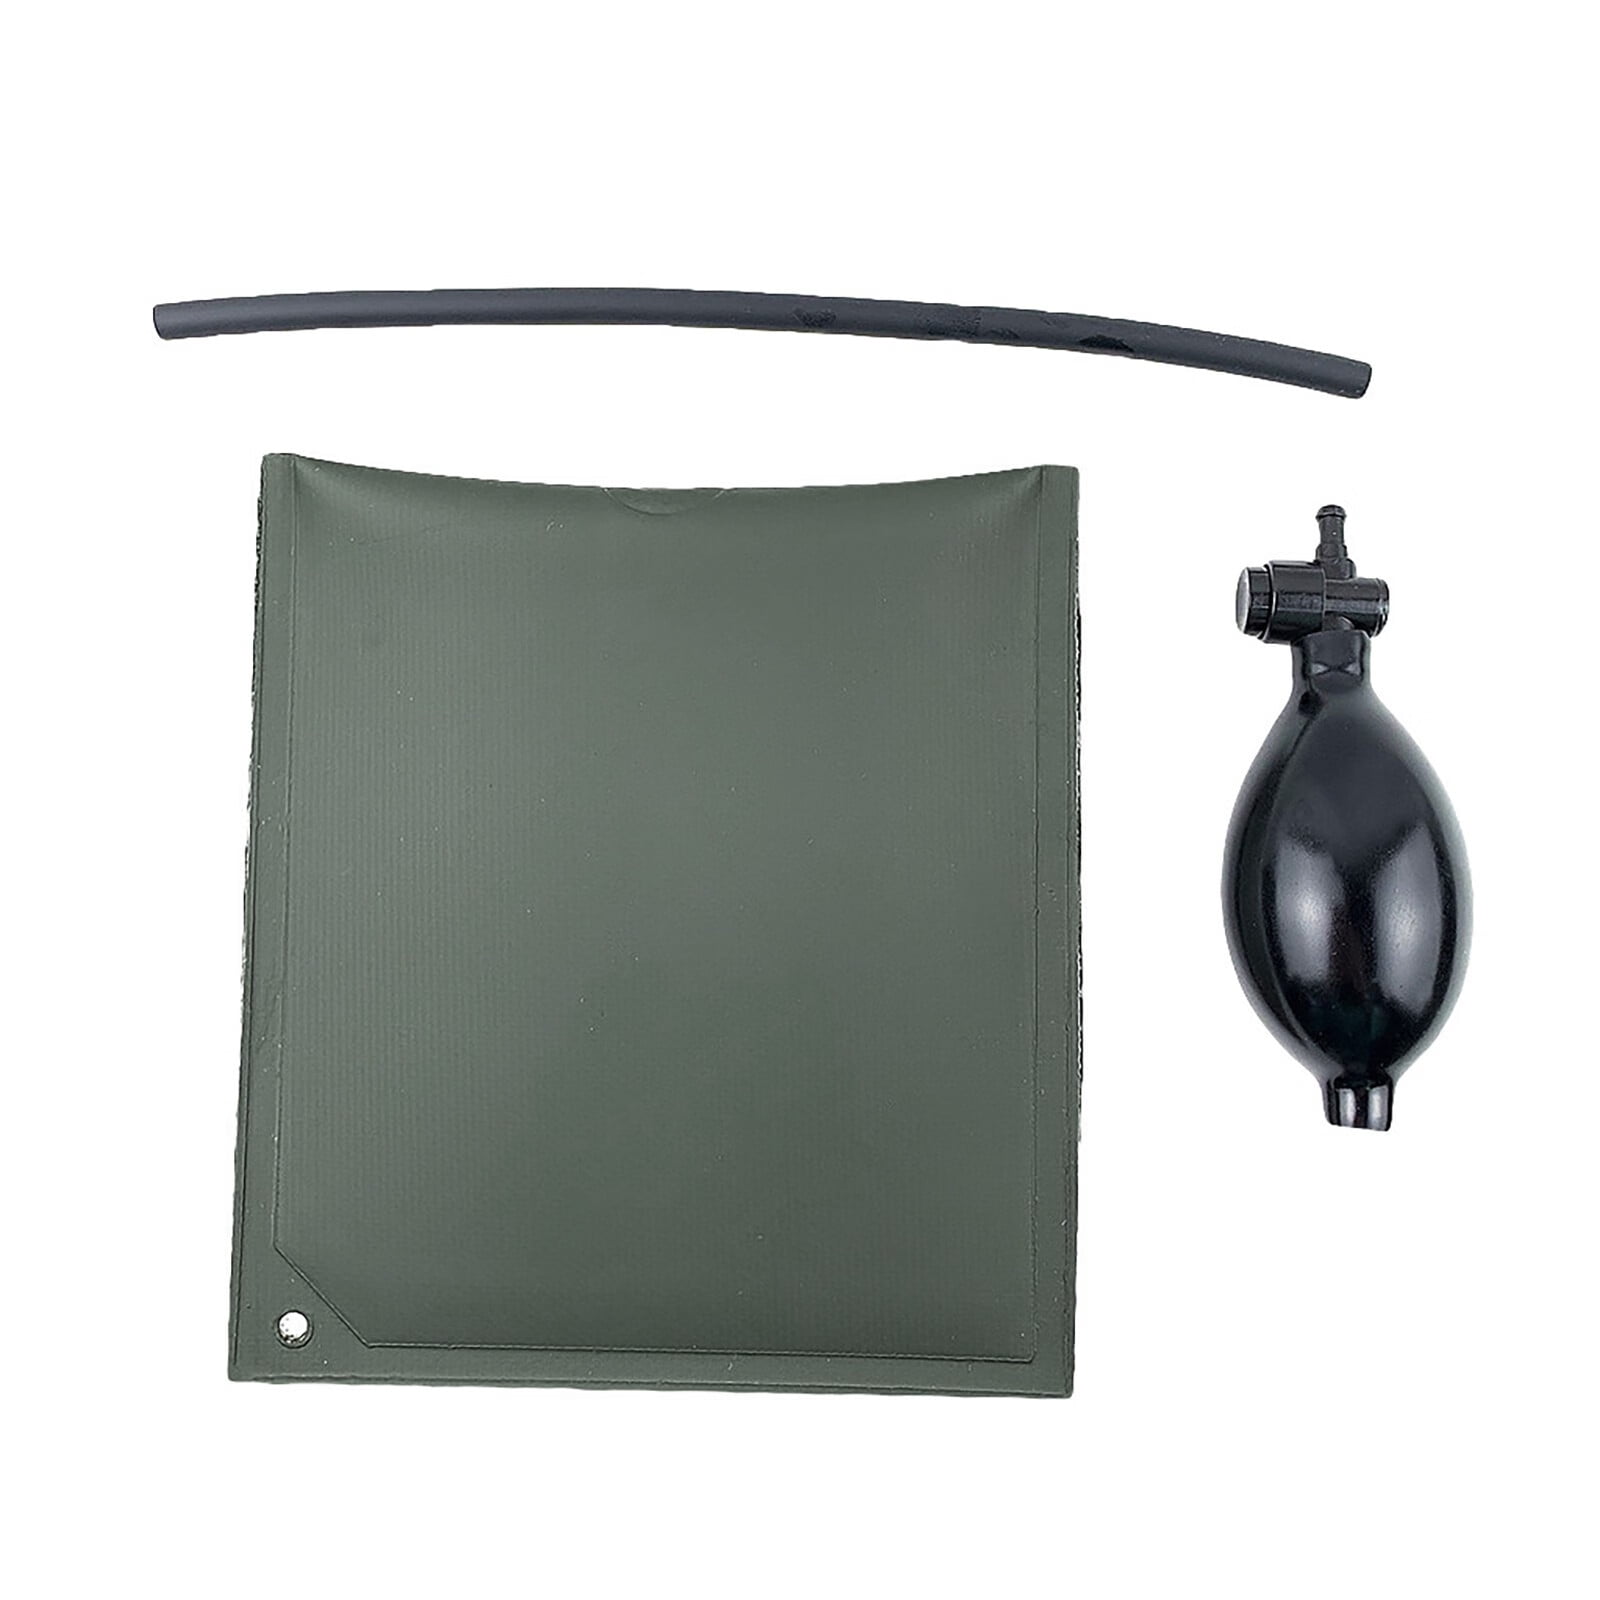 2pcs Air Wedge Pump Locksmith Supplies Pump Up Bag Car Door Window Frame  Fitting Install Shim Wedge Tools Set 170 * 150mm - AliExpress